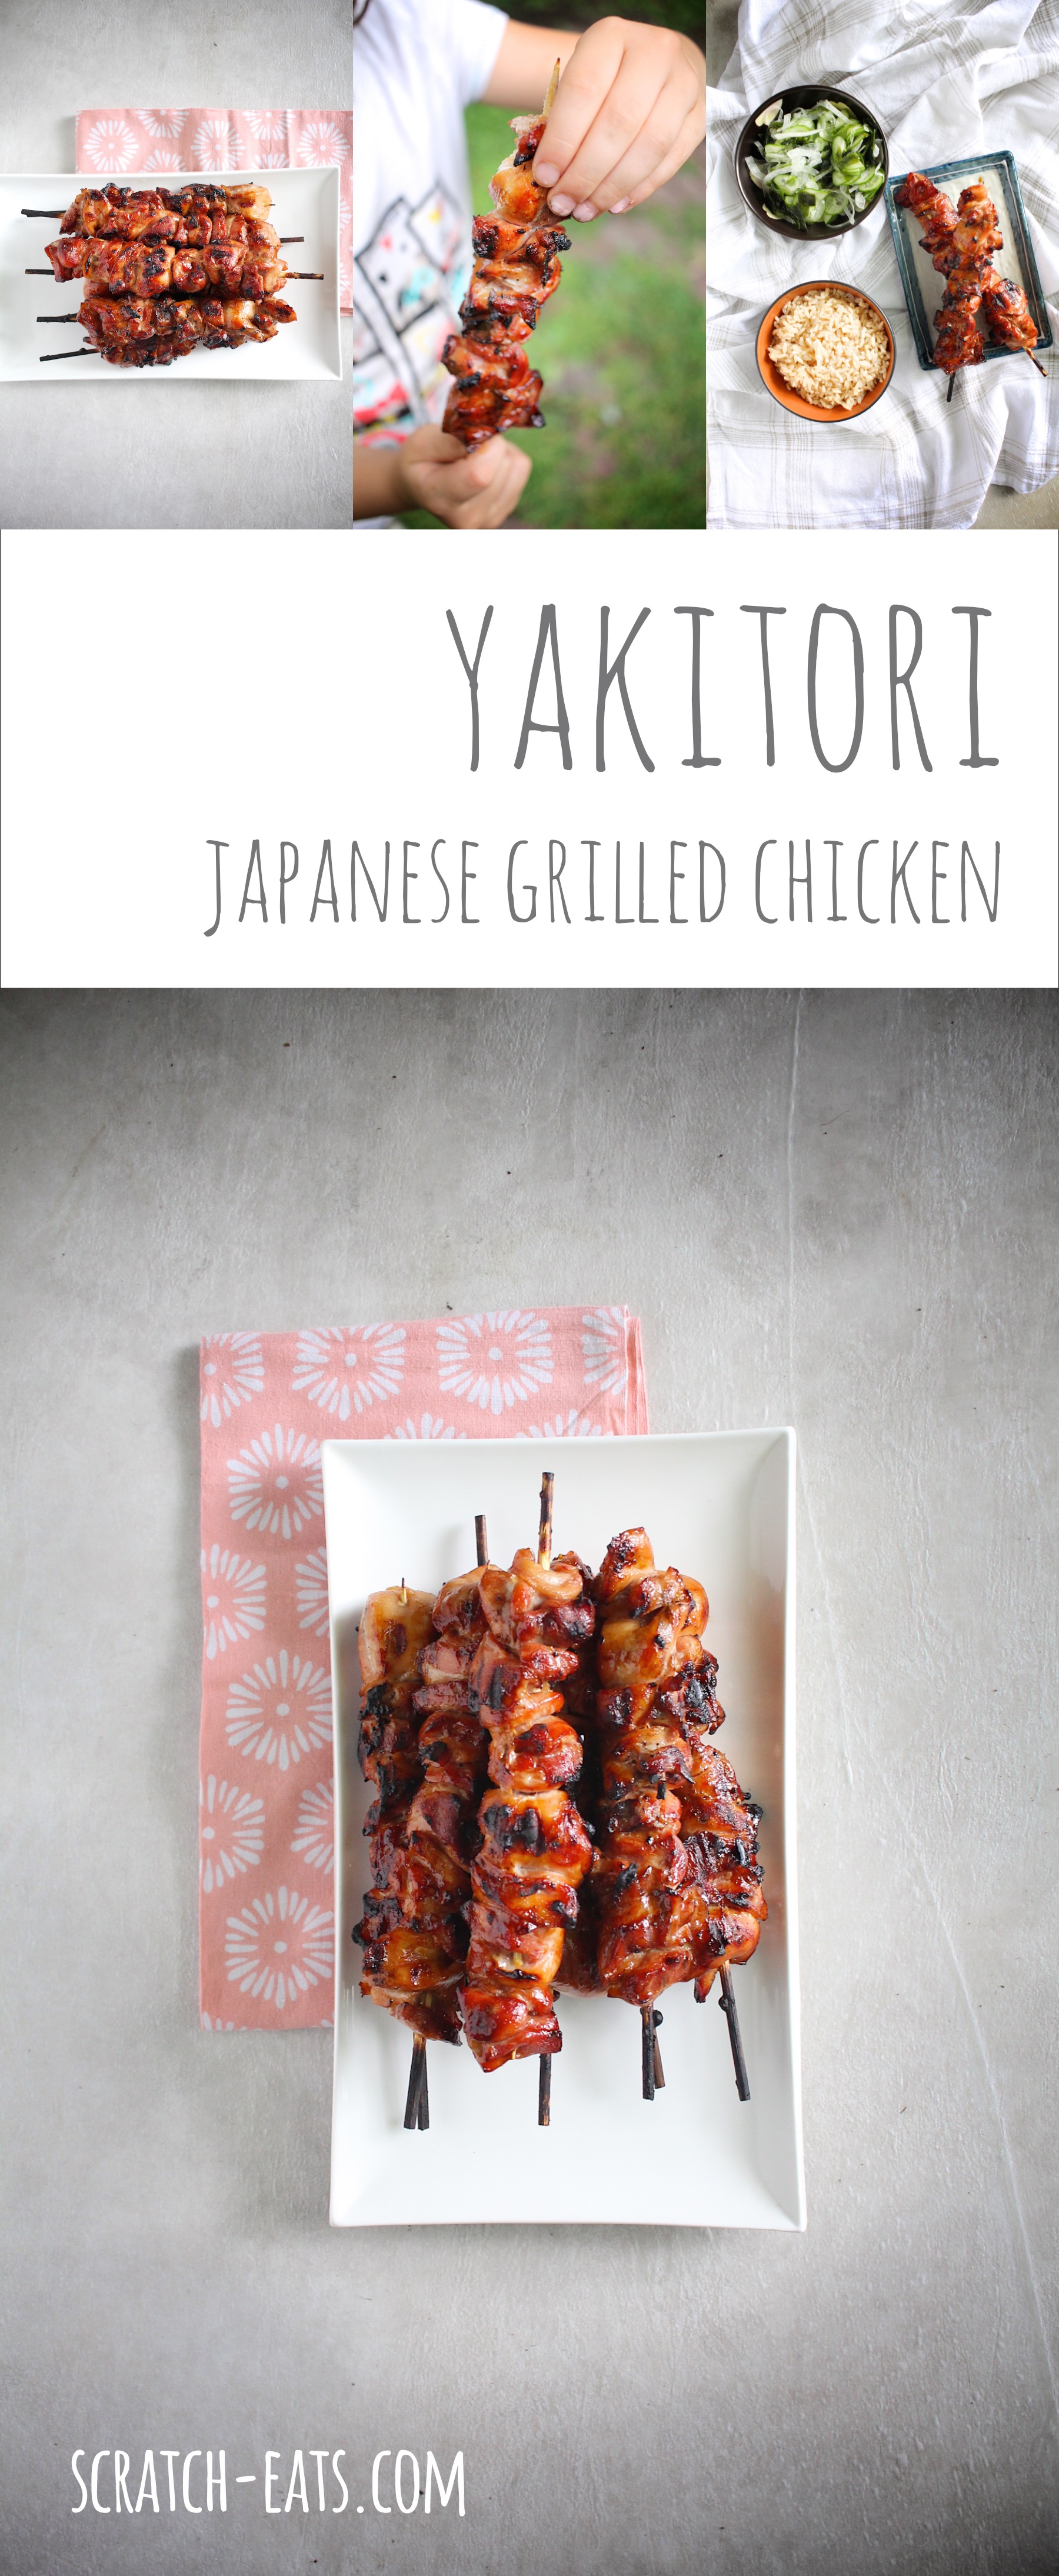 yakitori (Japanese grilled chicken)